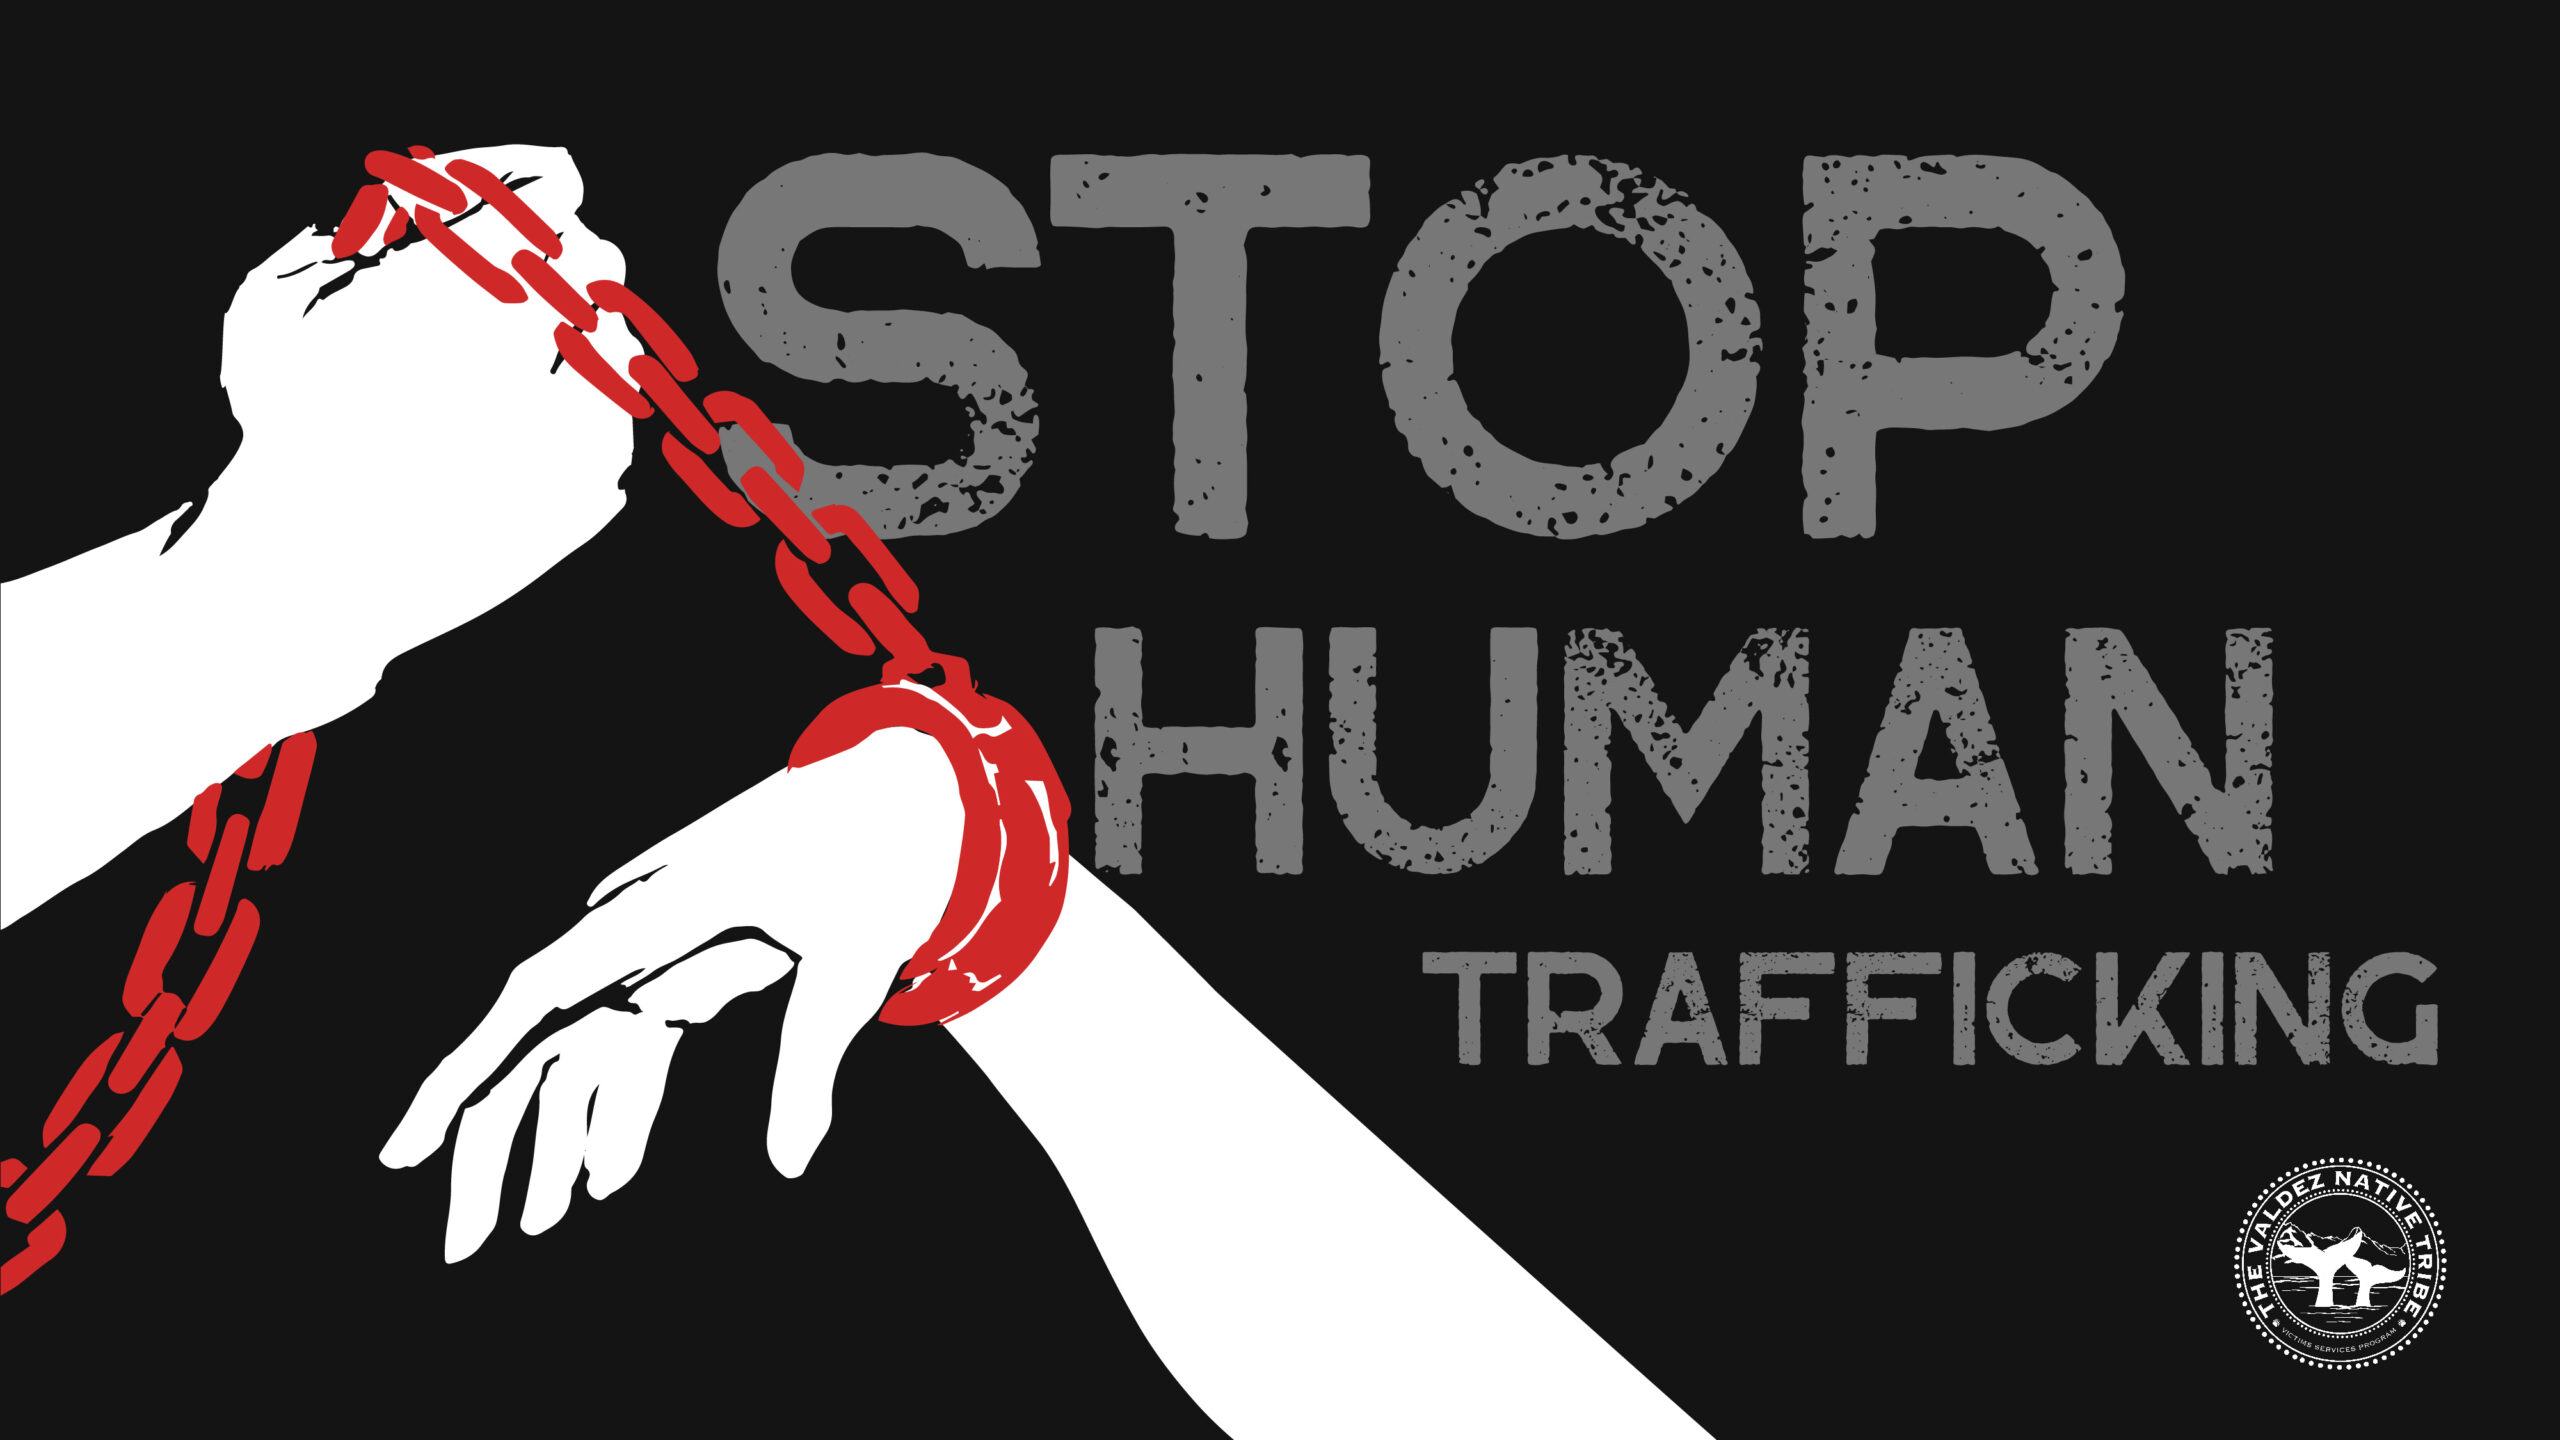 Breaking The Chain Stop Human Trafficking In Alaska Valdez Native Tribe